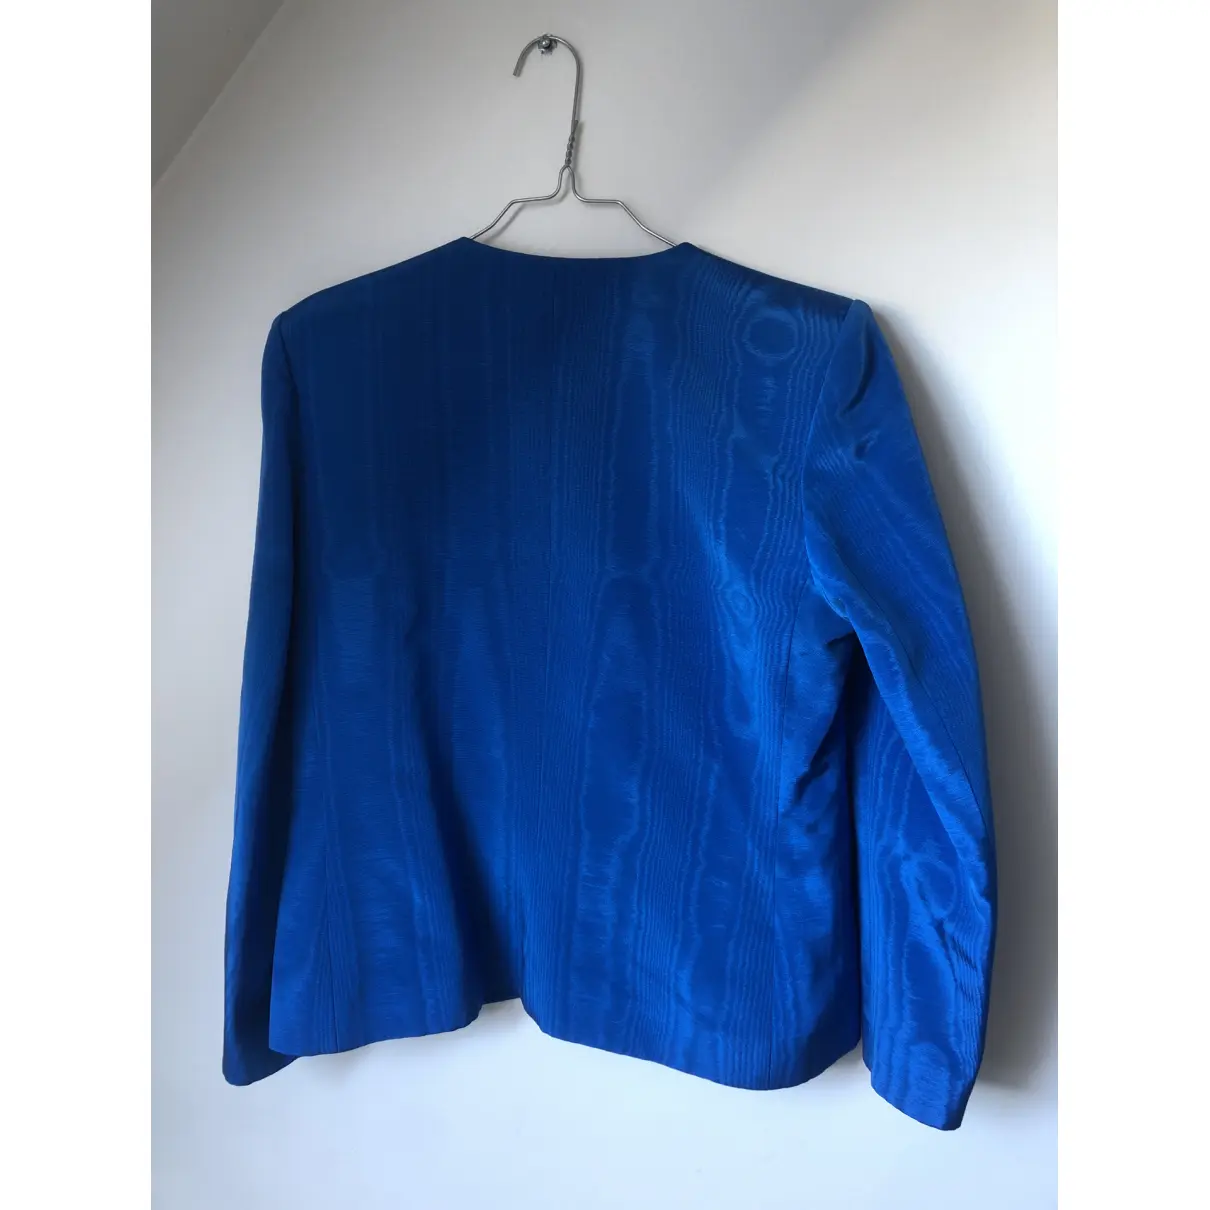 Buy Yves Saint Laurent Suit jacket online - Vintage